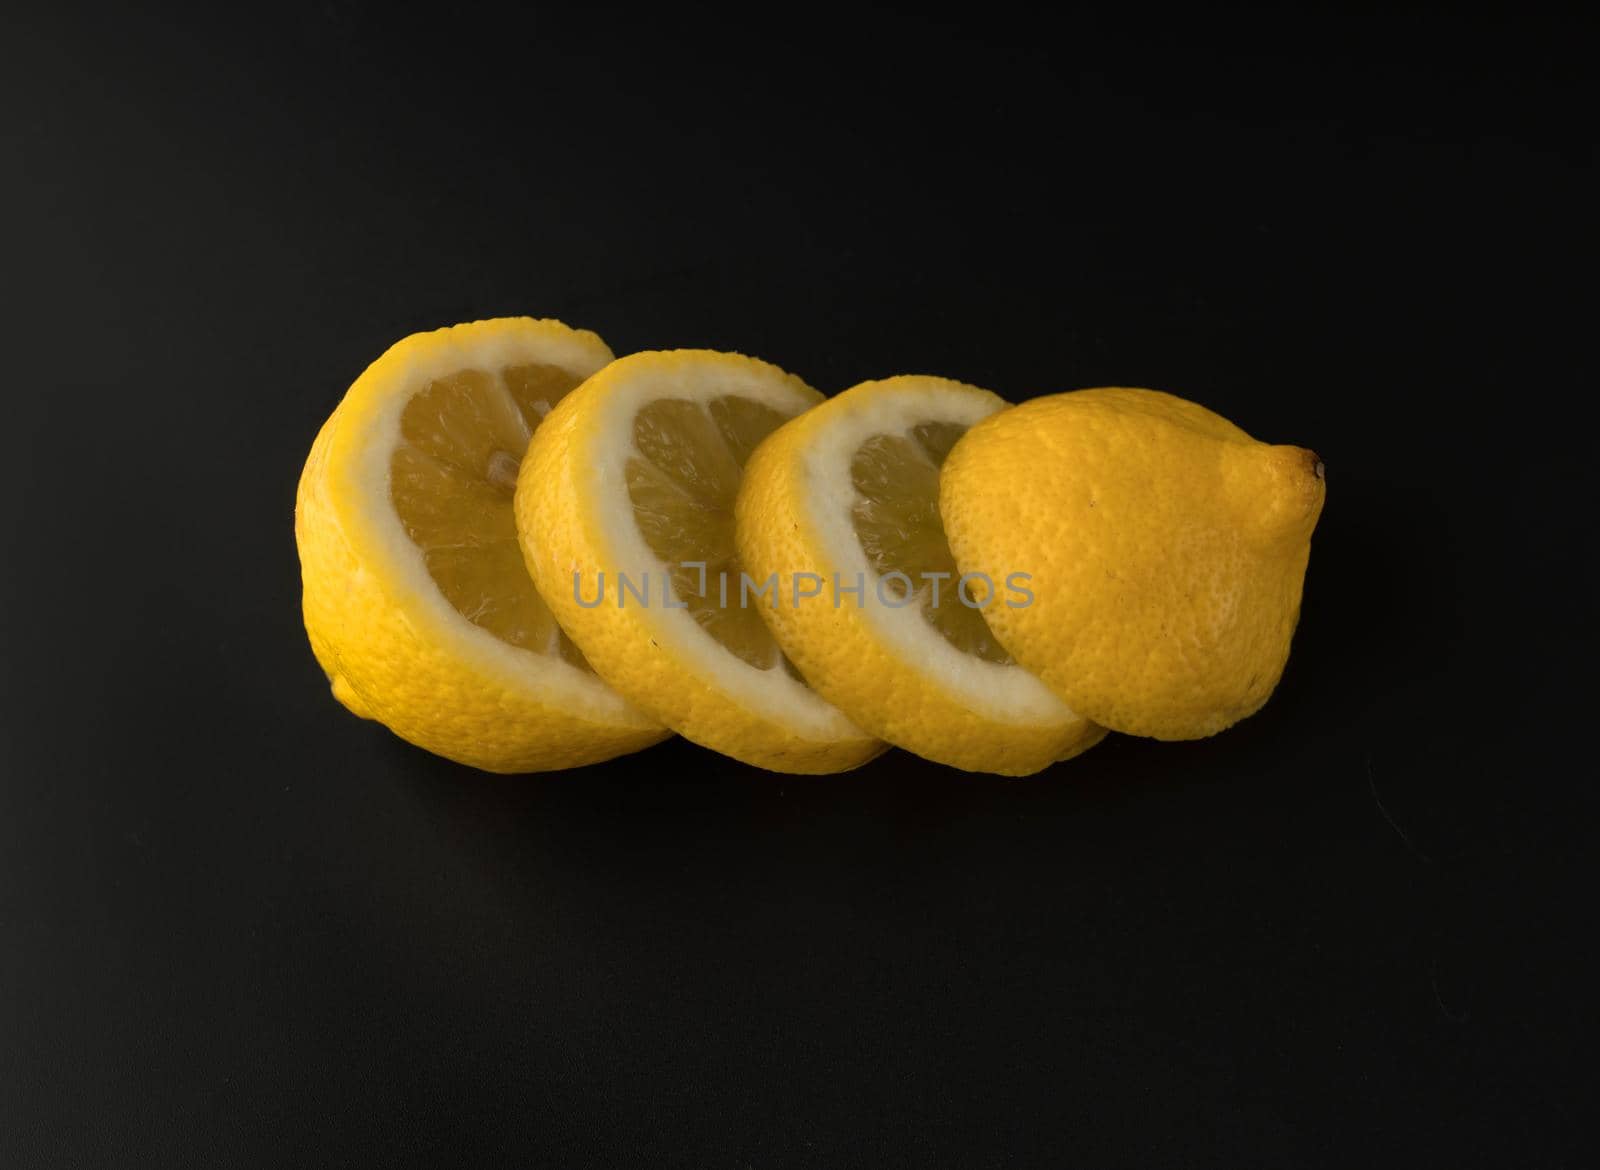 Lemon sliced in round slices, on black background isolated